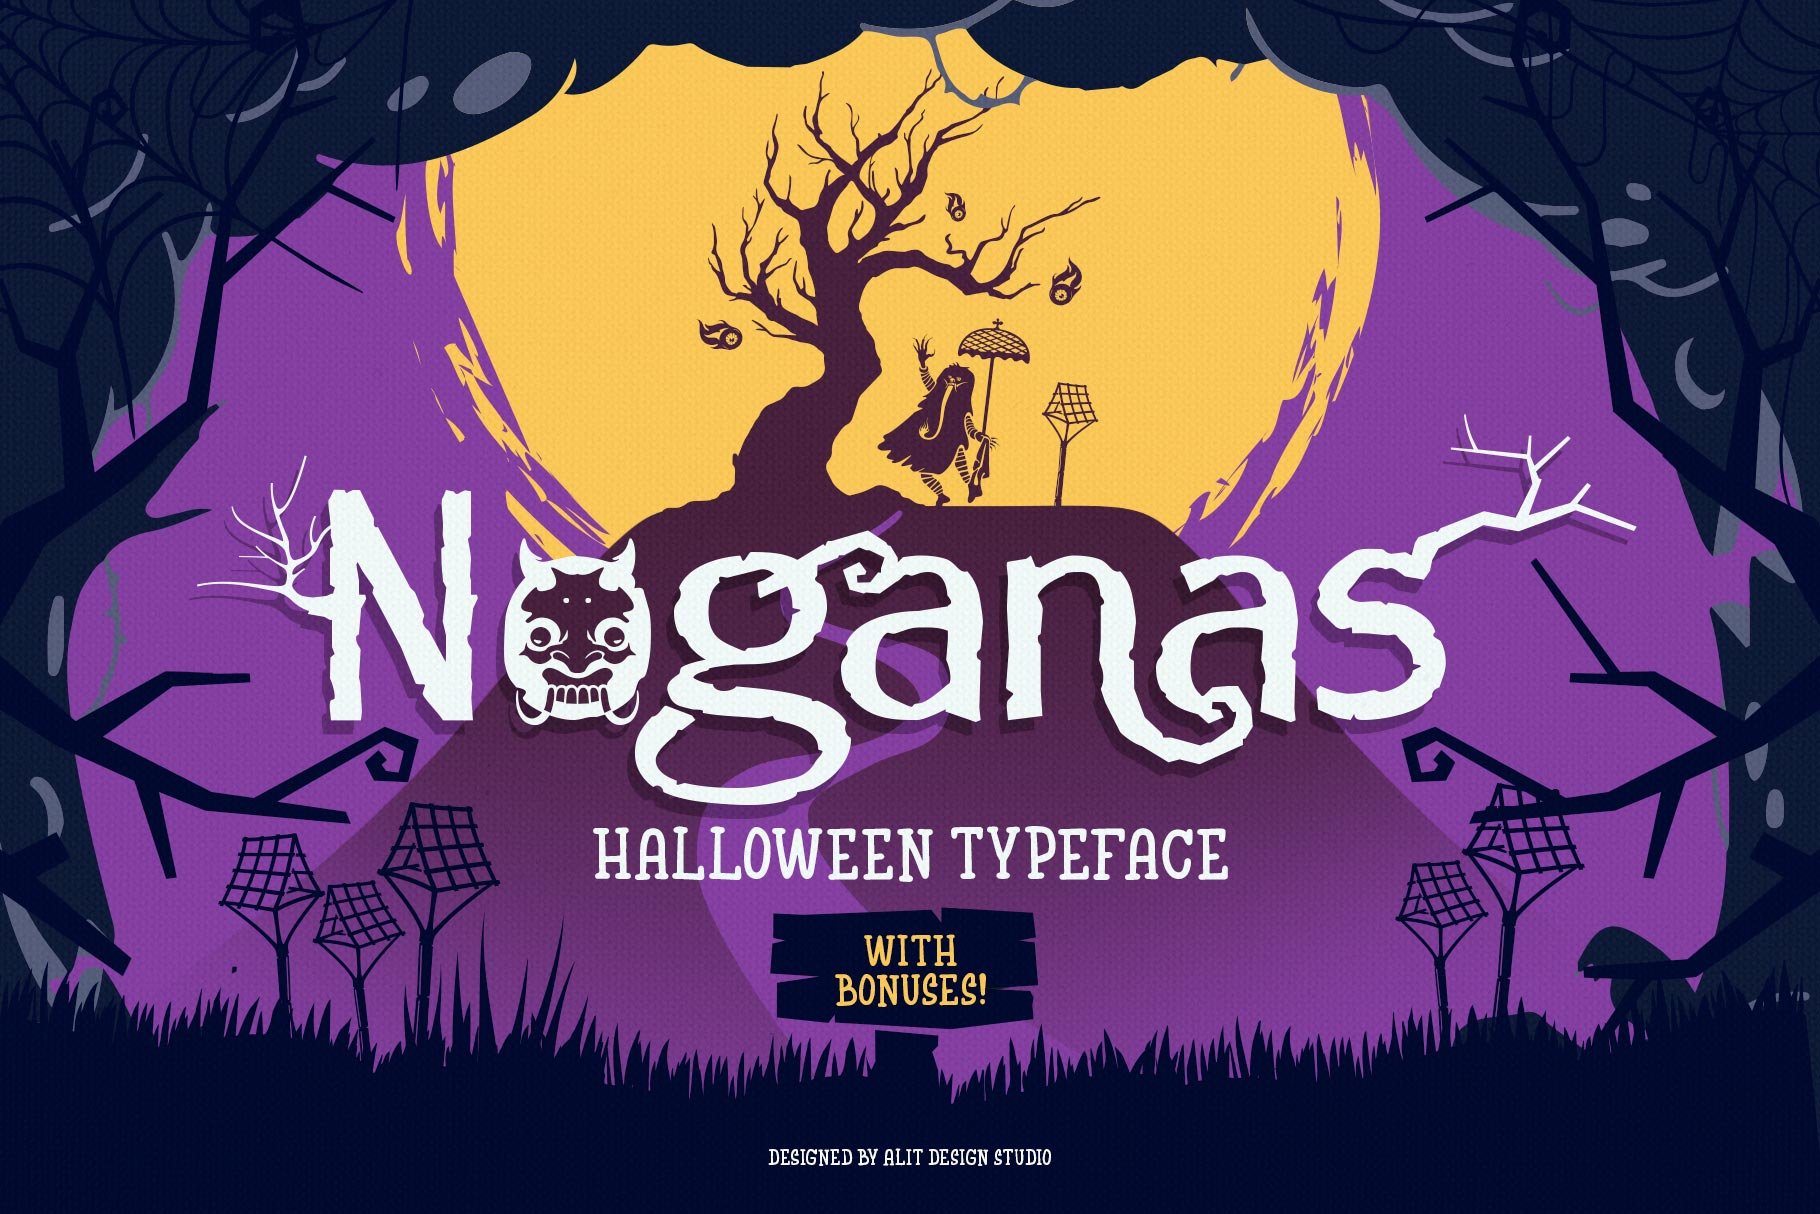 Noganas Halloween font cover image.